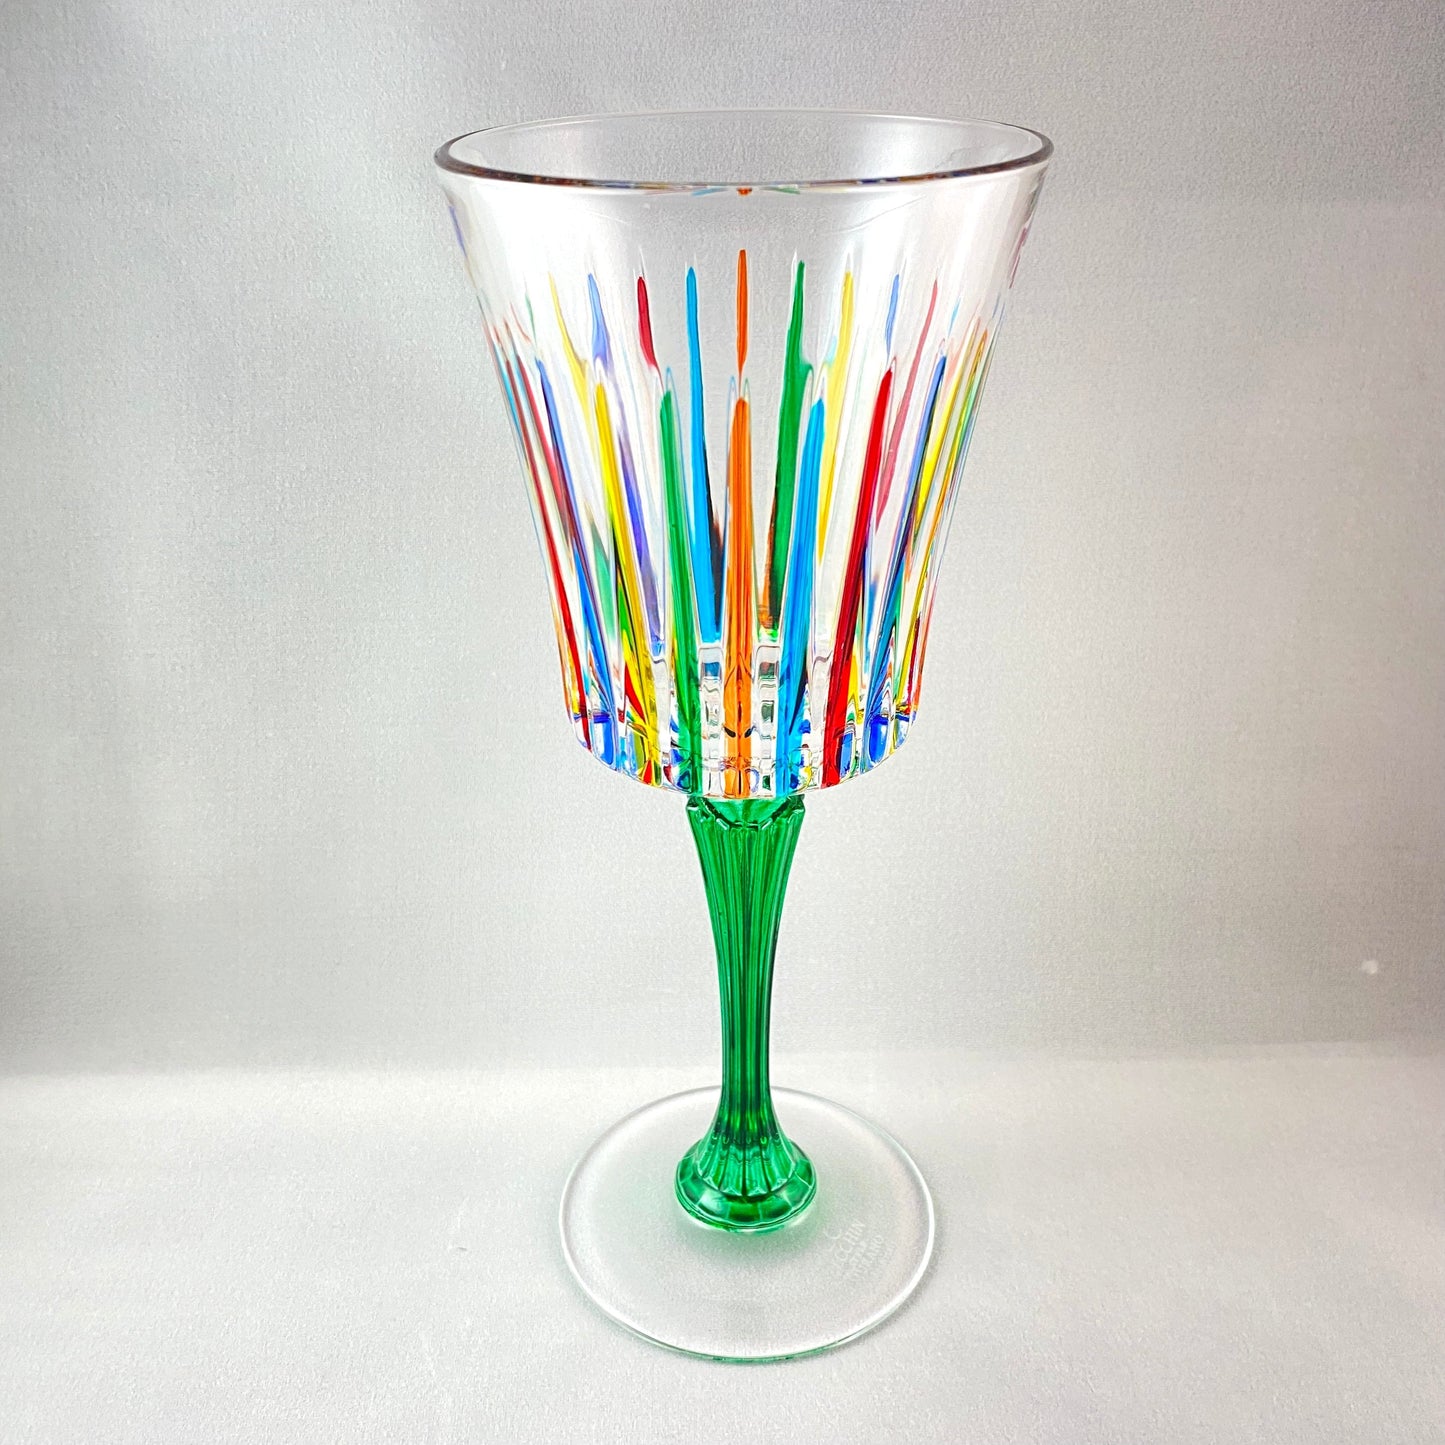 Green Stem Venetian Glass Timeless Wine Glass - Handmade in Italy, Colorful Murano Glass